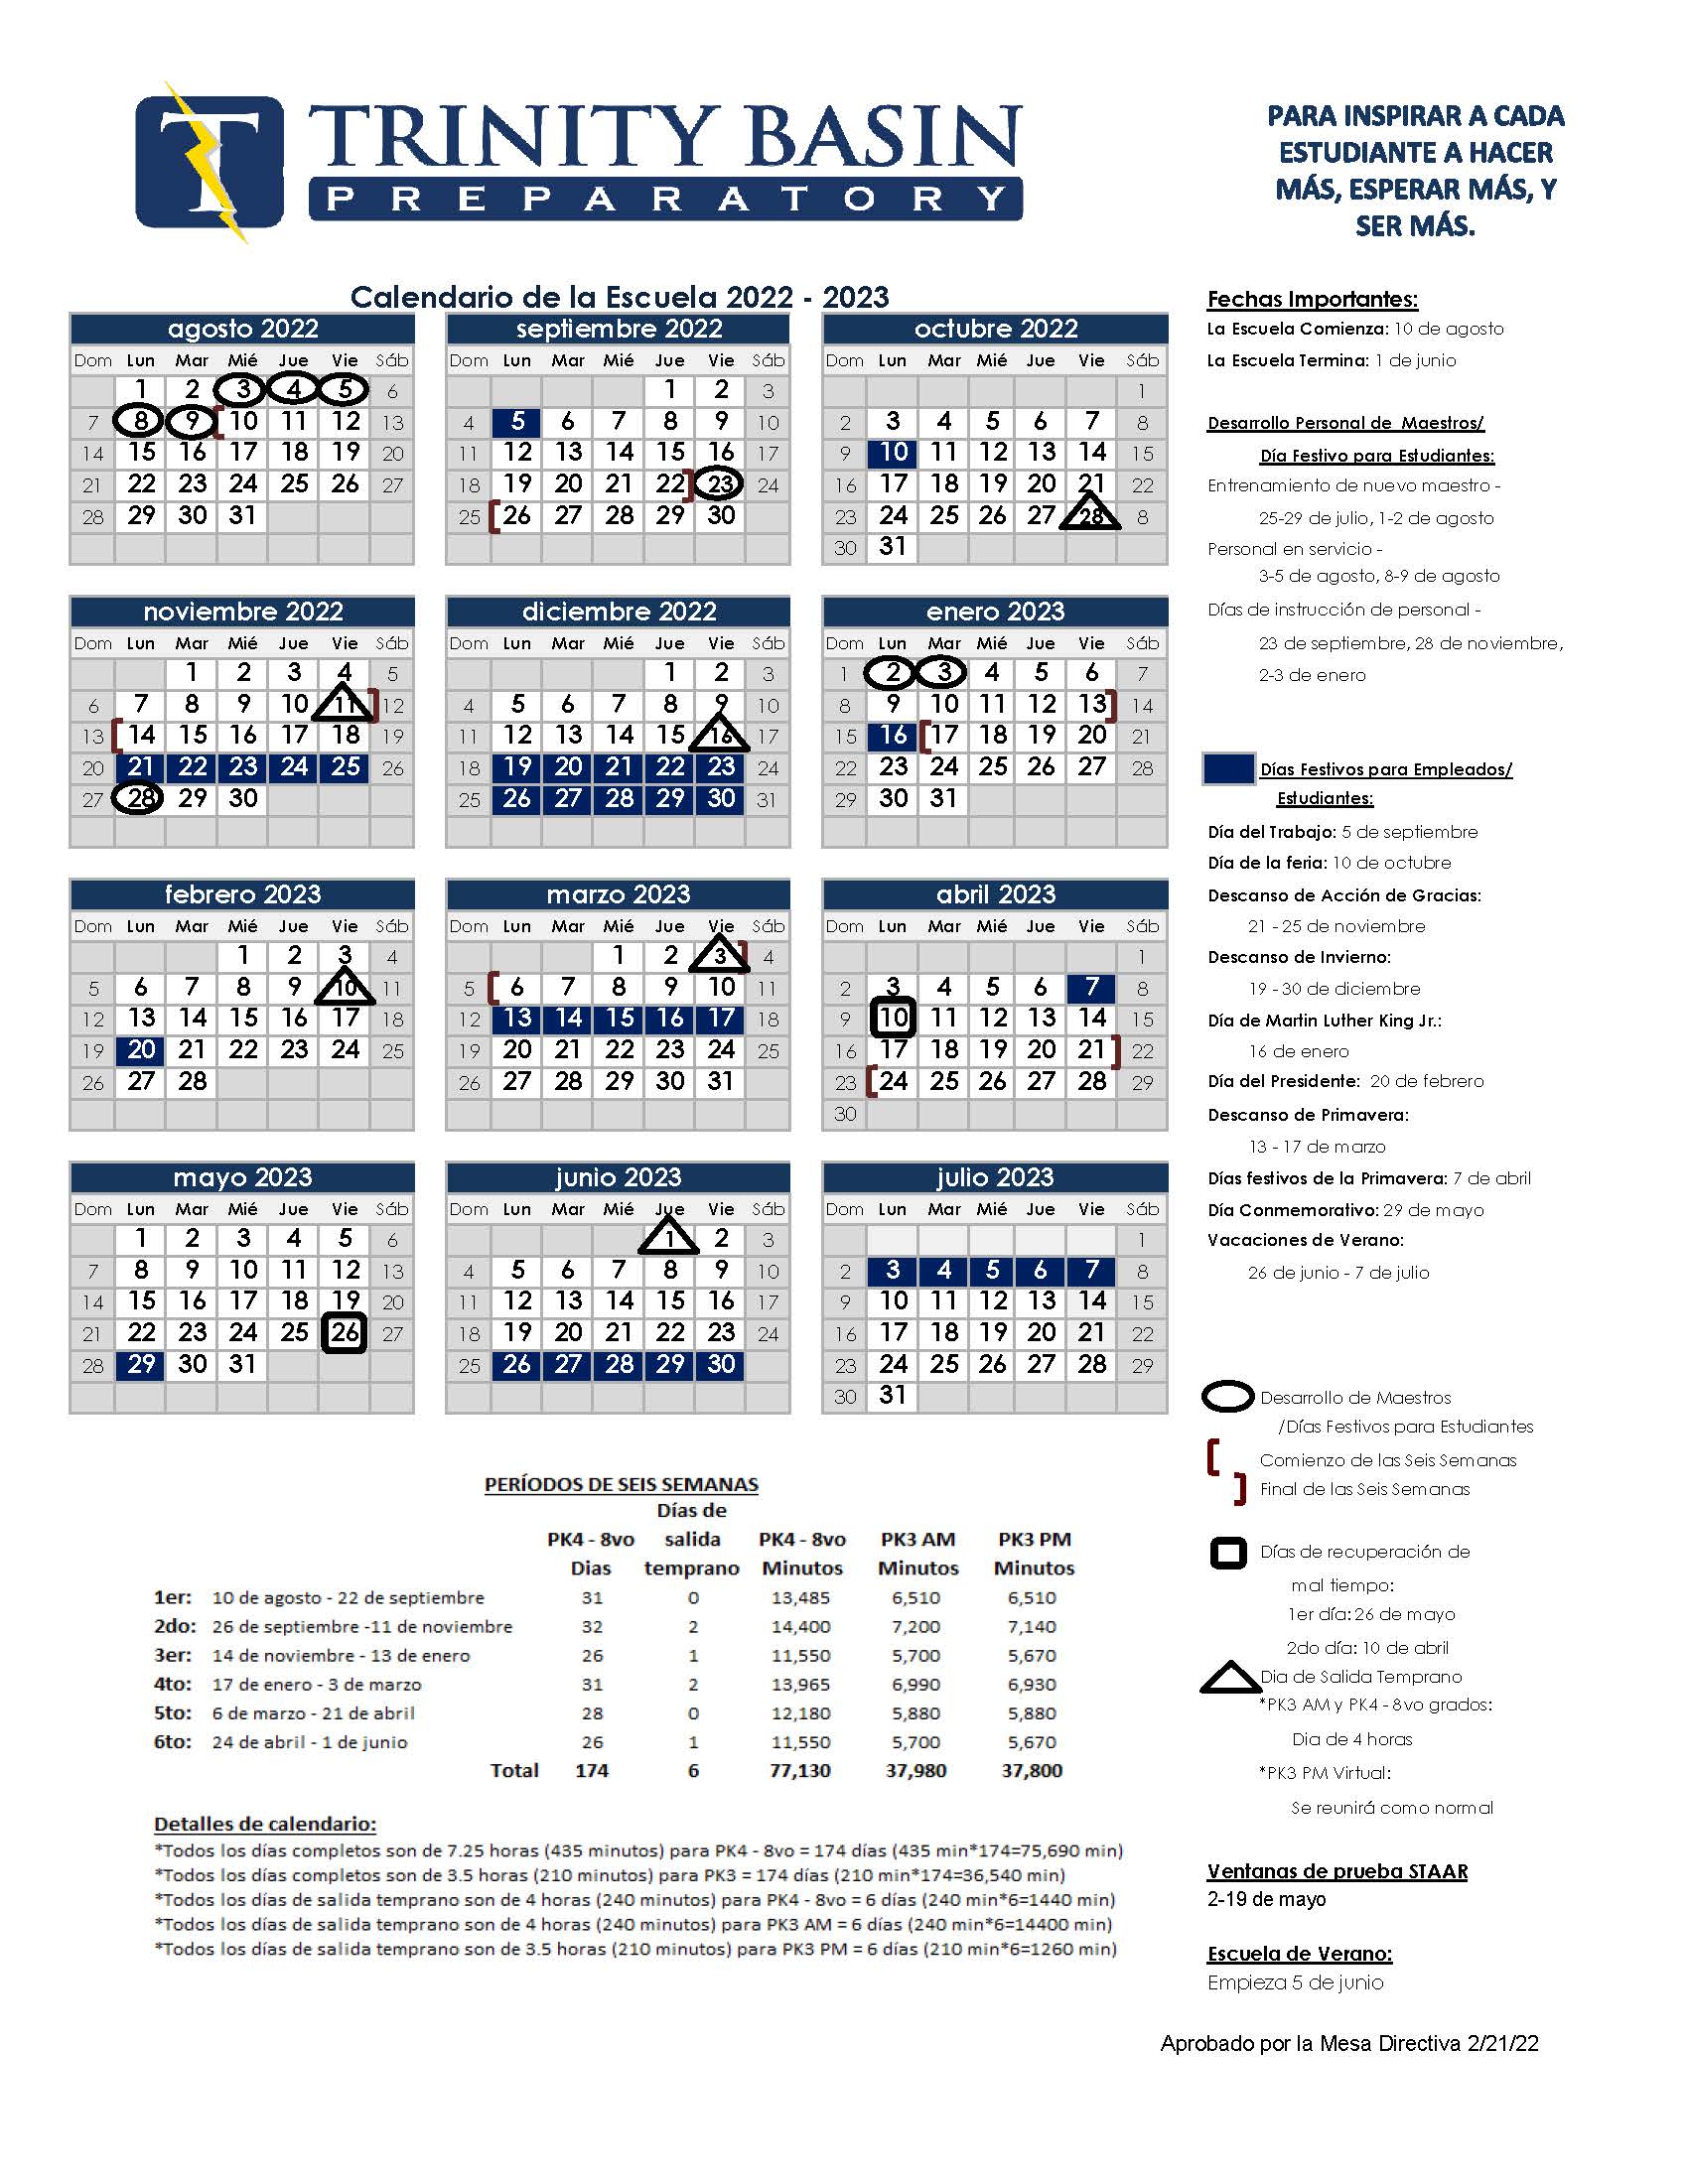 trinity-basin-preparatory-district-calendar